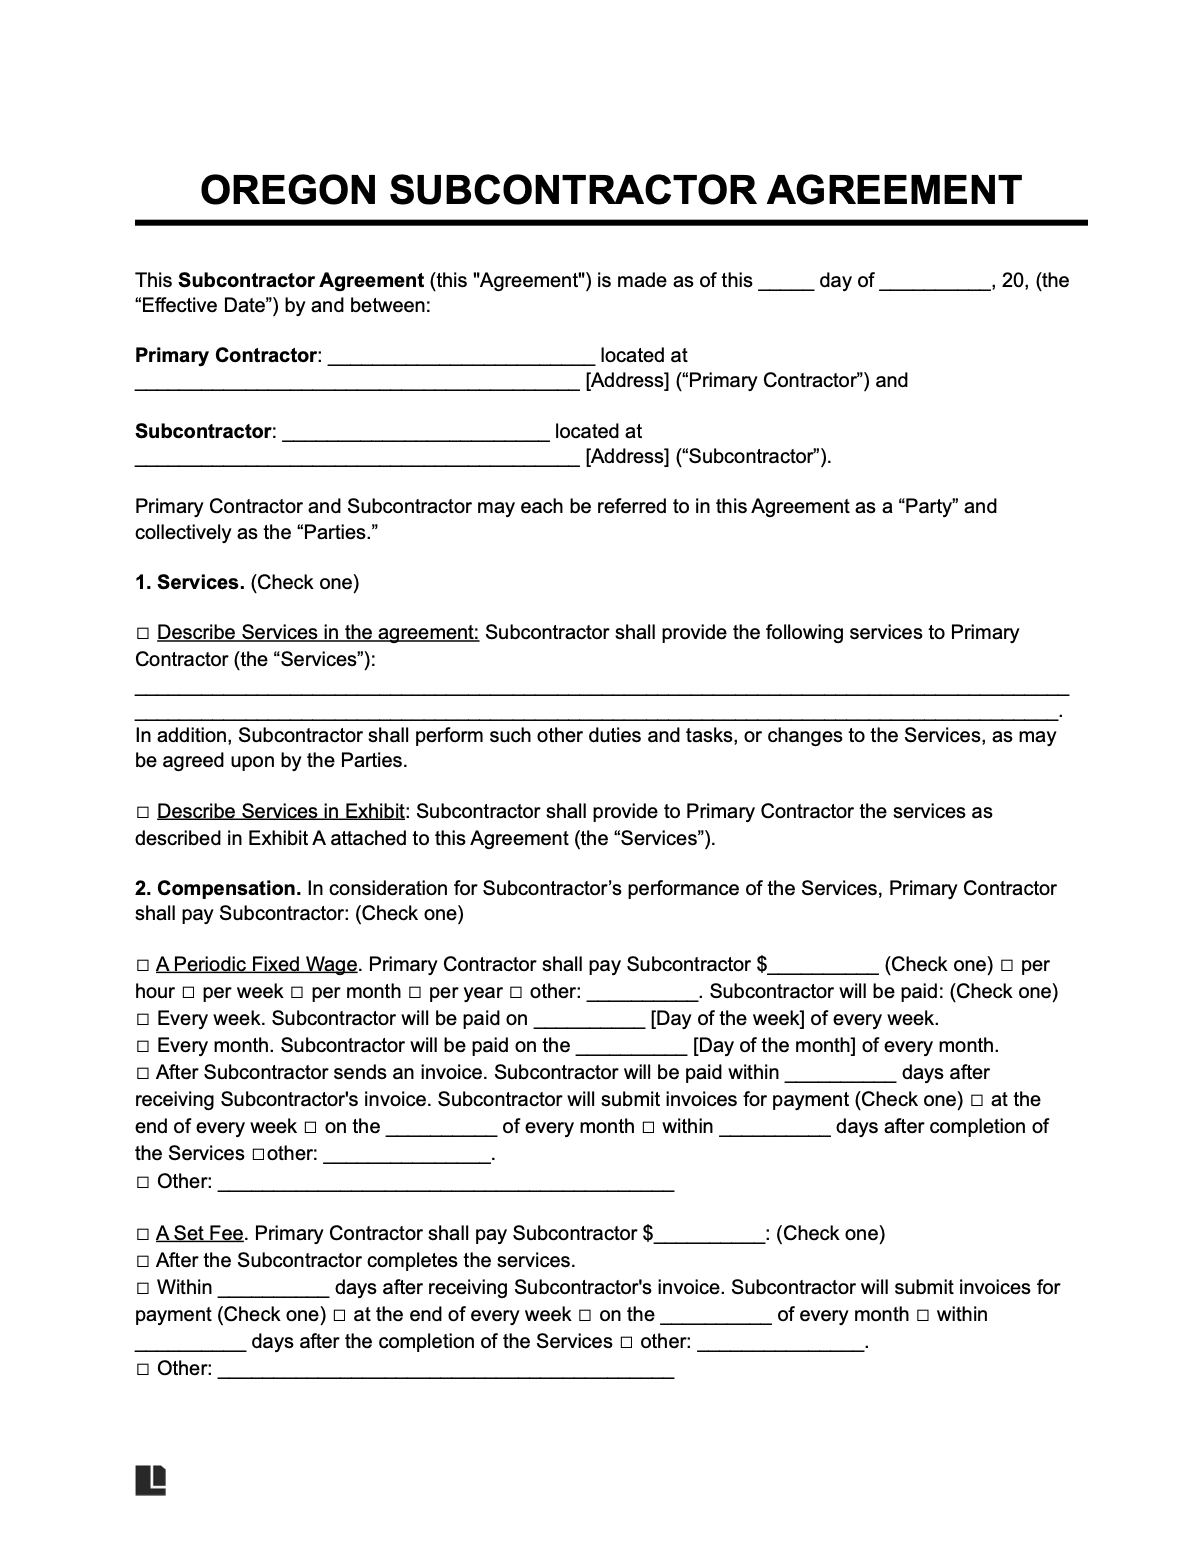 oregon subcontractor agreement template